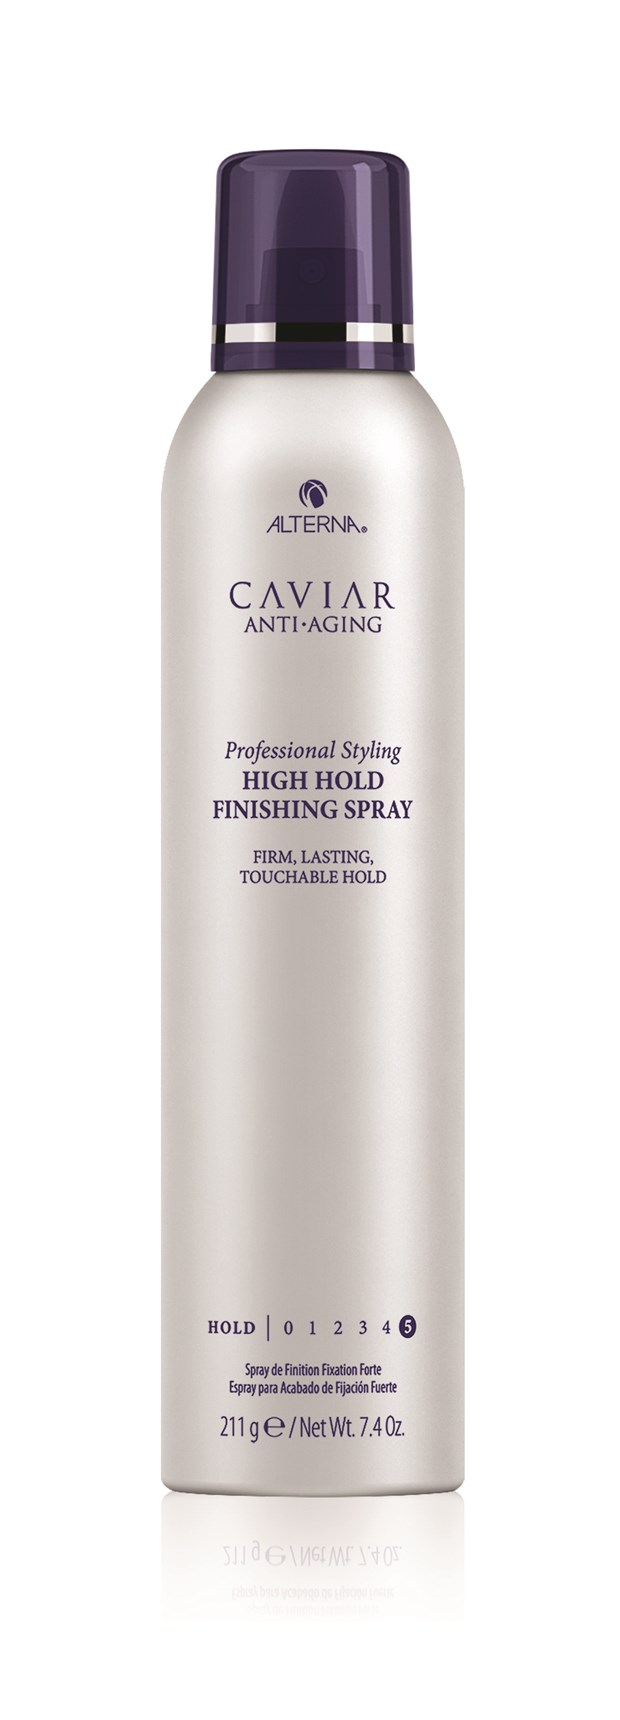 Caviar Anti-Aging Styling High Hold Finishing Spray